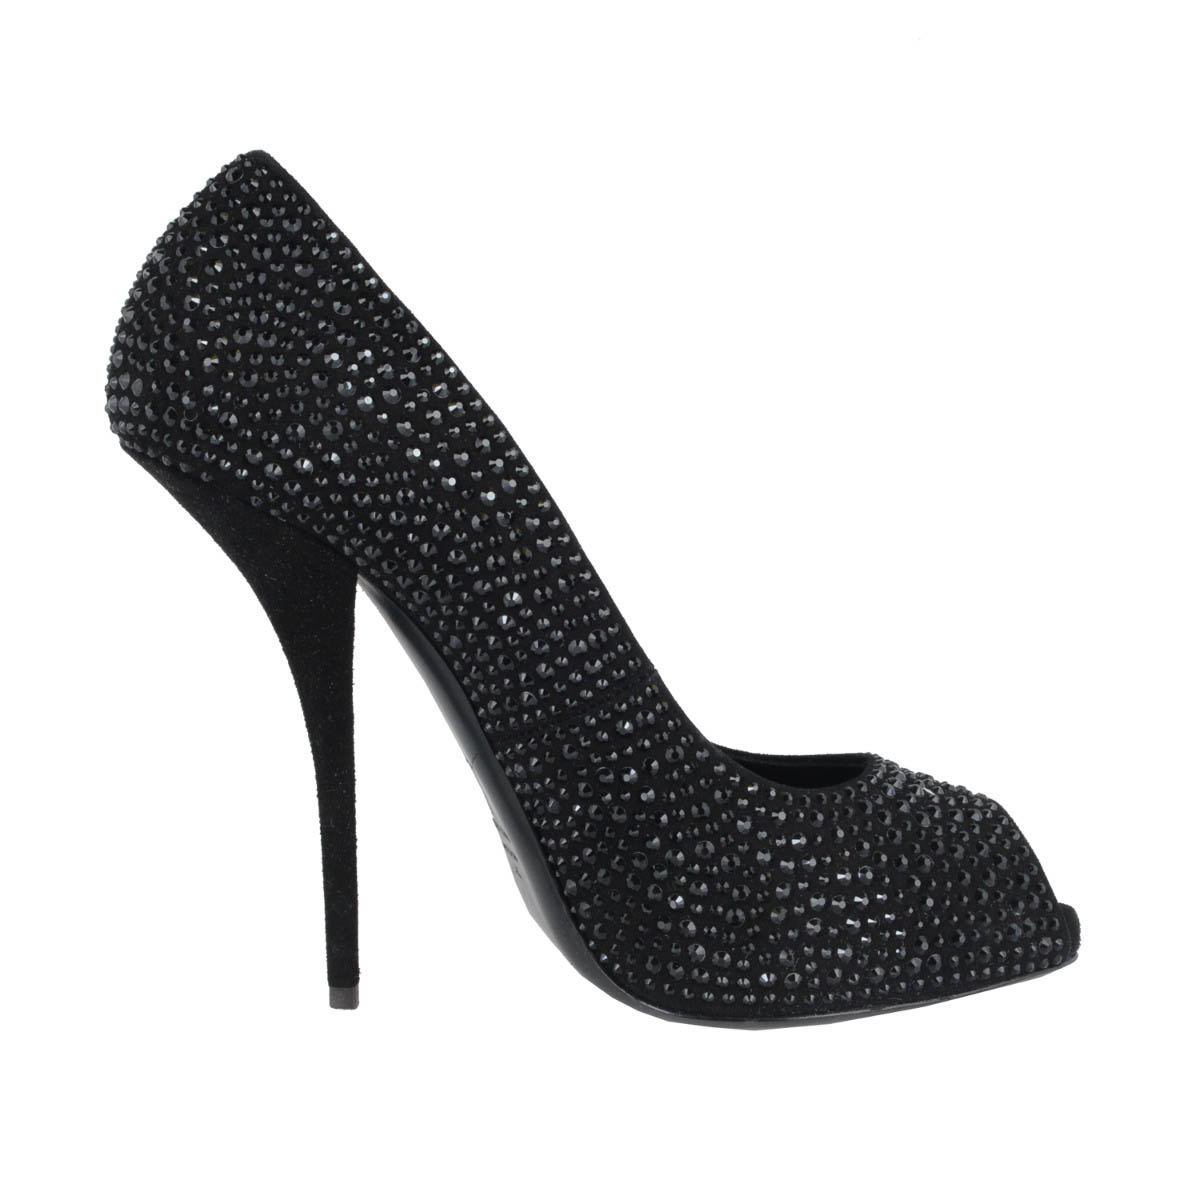 Giuseppe Zanotti Design Womens Suede Black Pumps High Heels Shoes US 10 IT 41 